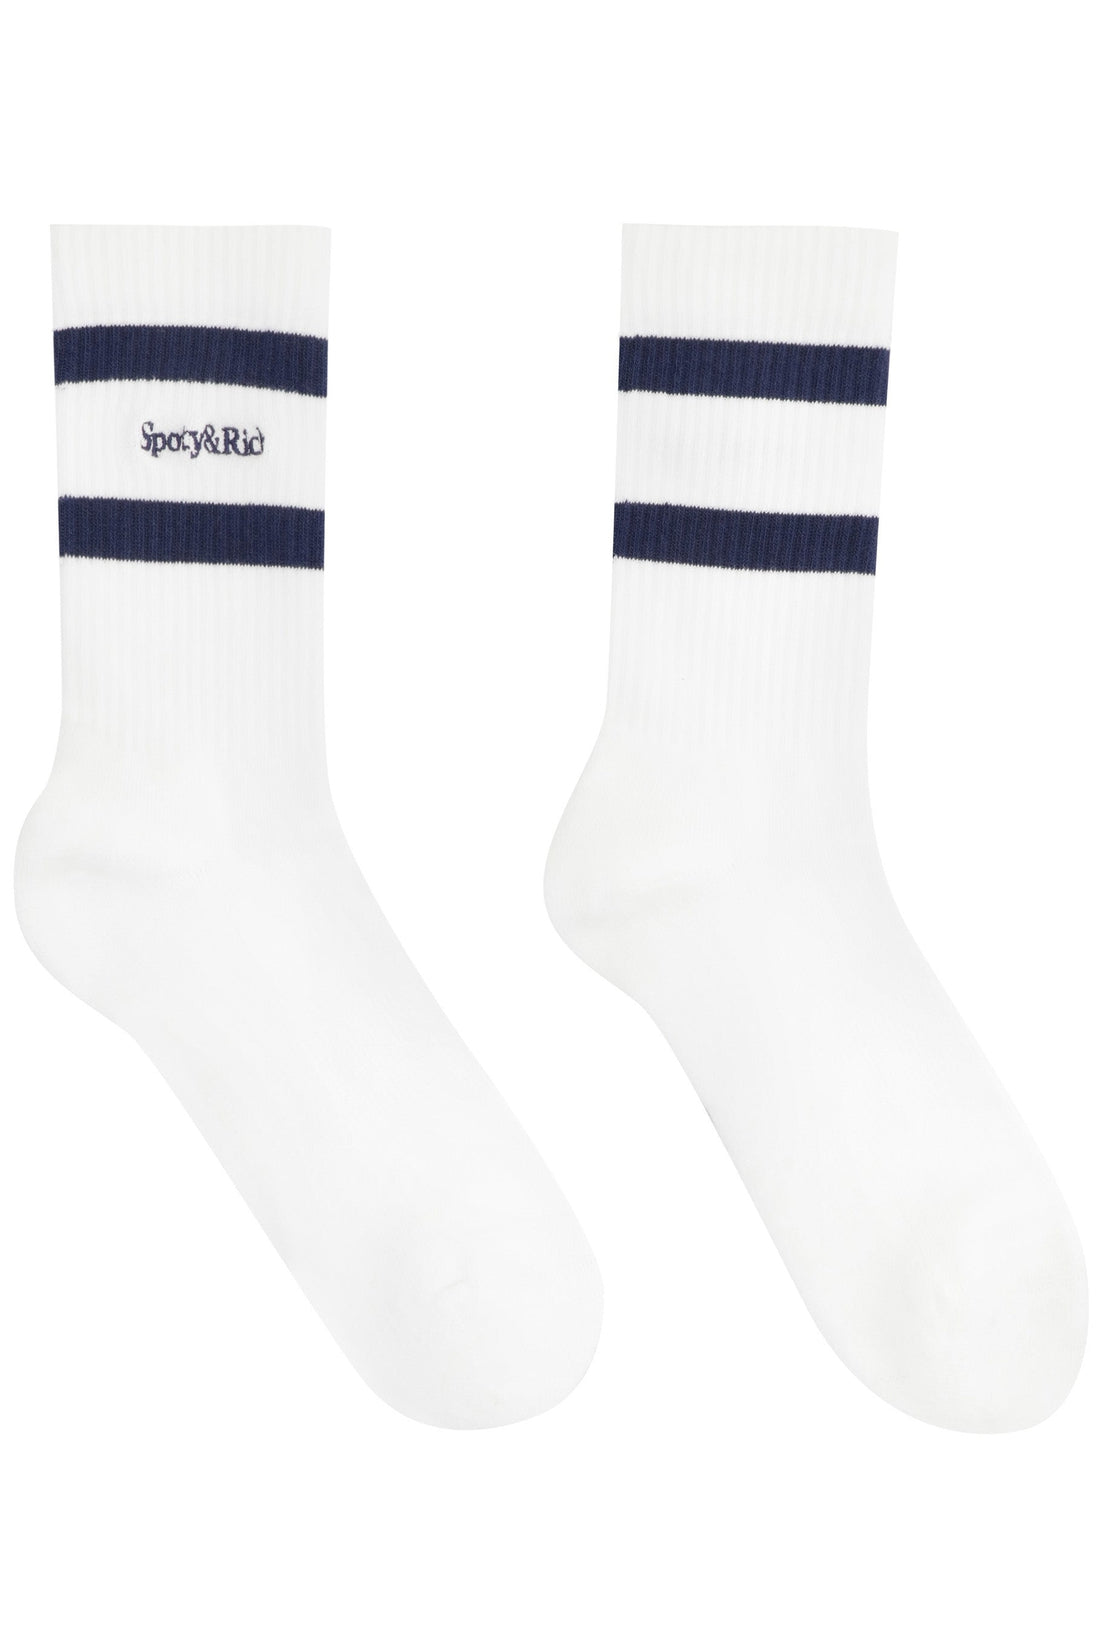 Sporty & Rich-OUTLET-SALE-Cotton socks with logo-ARCHIVIST